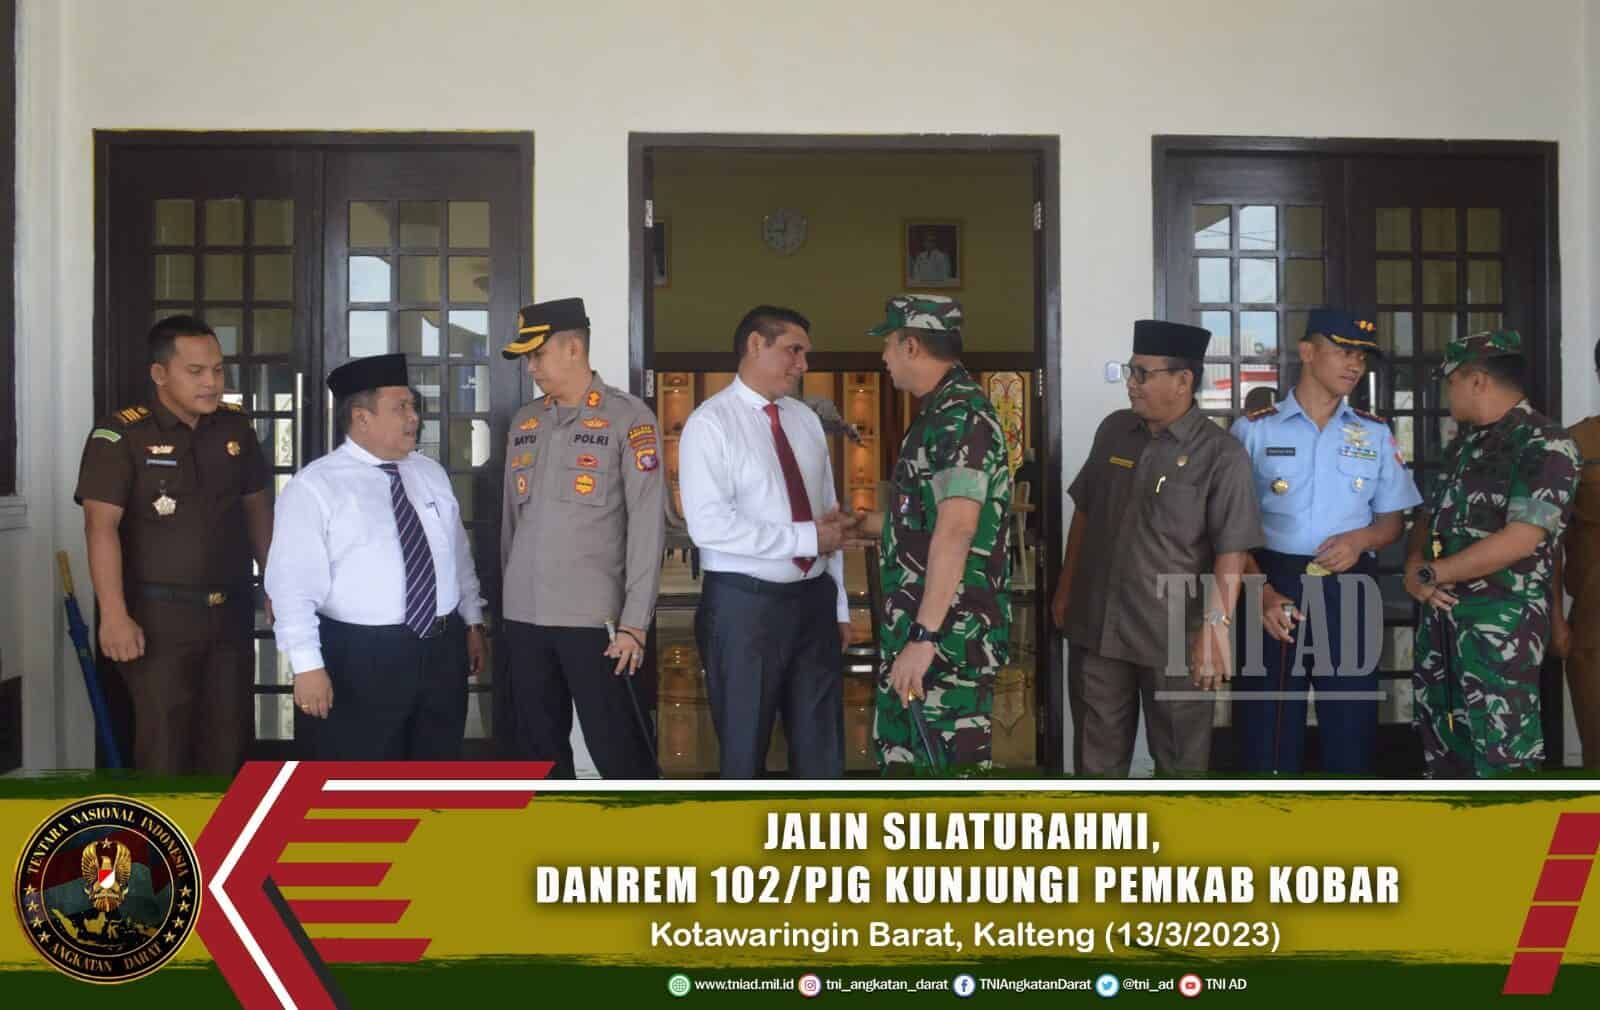 Jalin Silaturahmi, Danrem 102/Pjg Kunjungi Pemkab Kobar